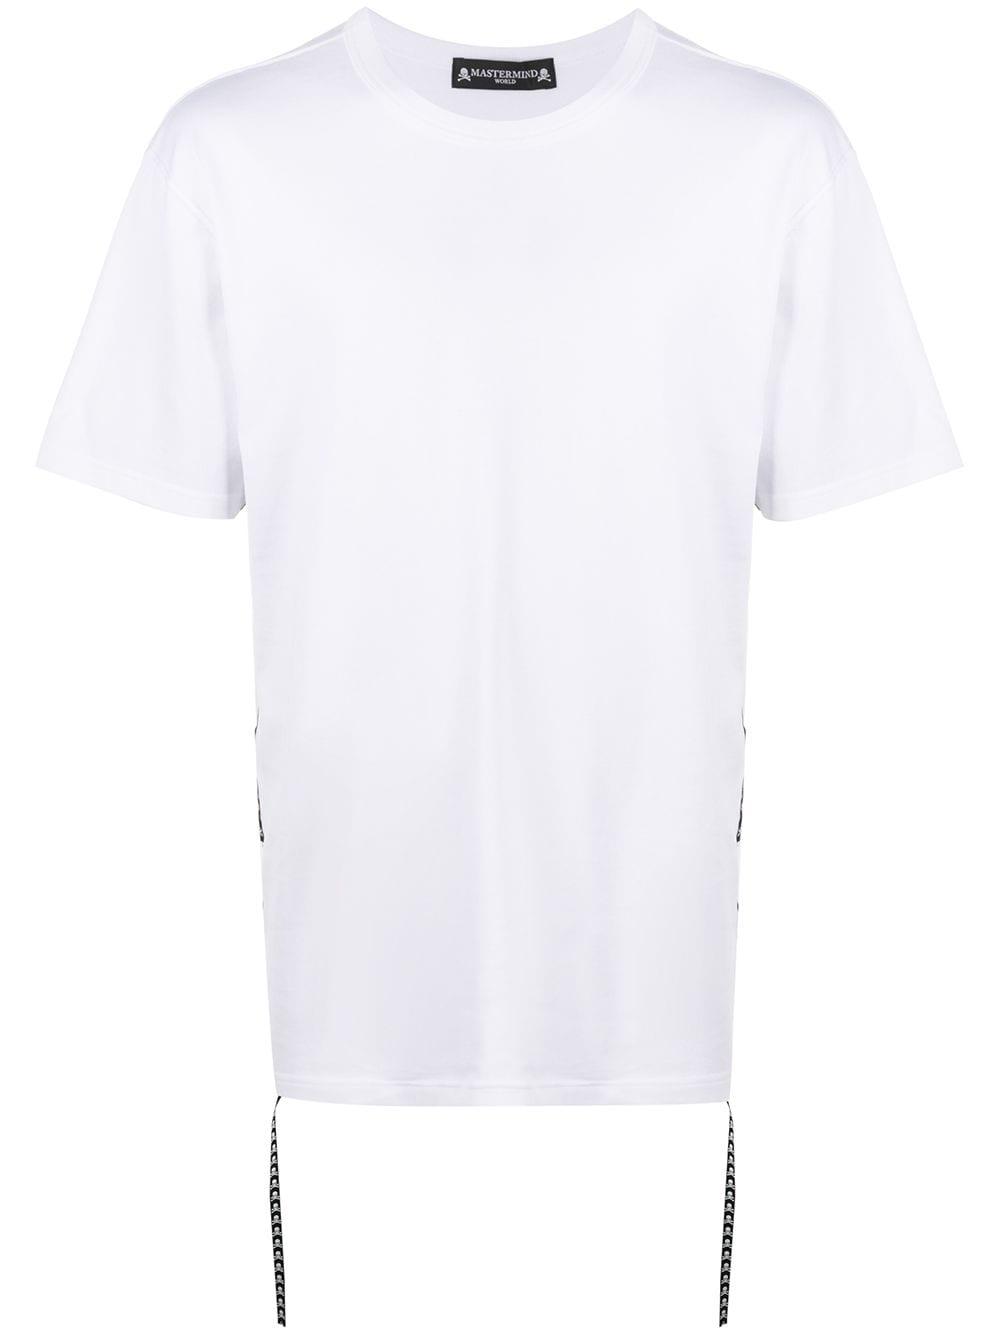 Mastermind Japan Cotton Logo Stripe T-shirt in White for Men - Lyst